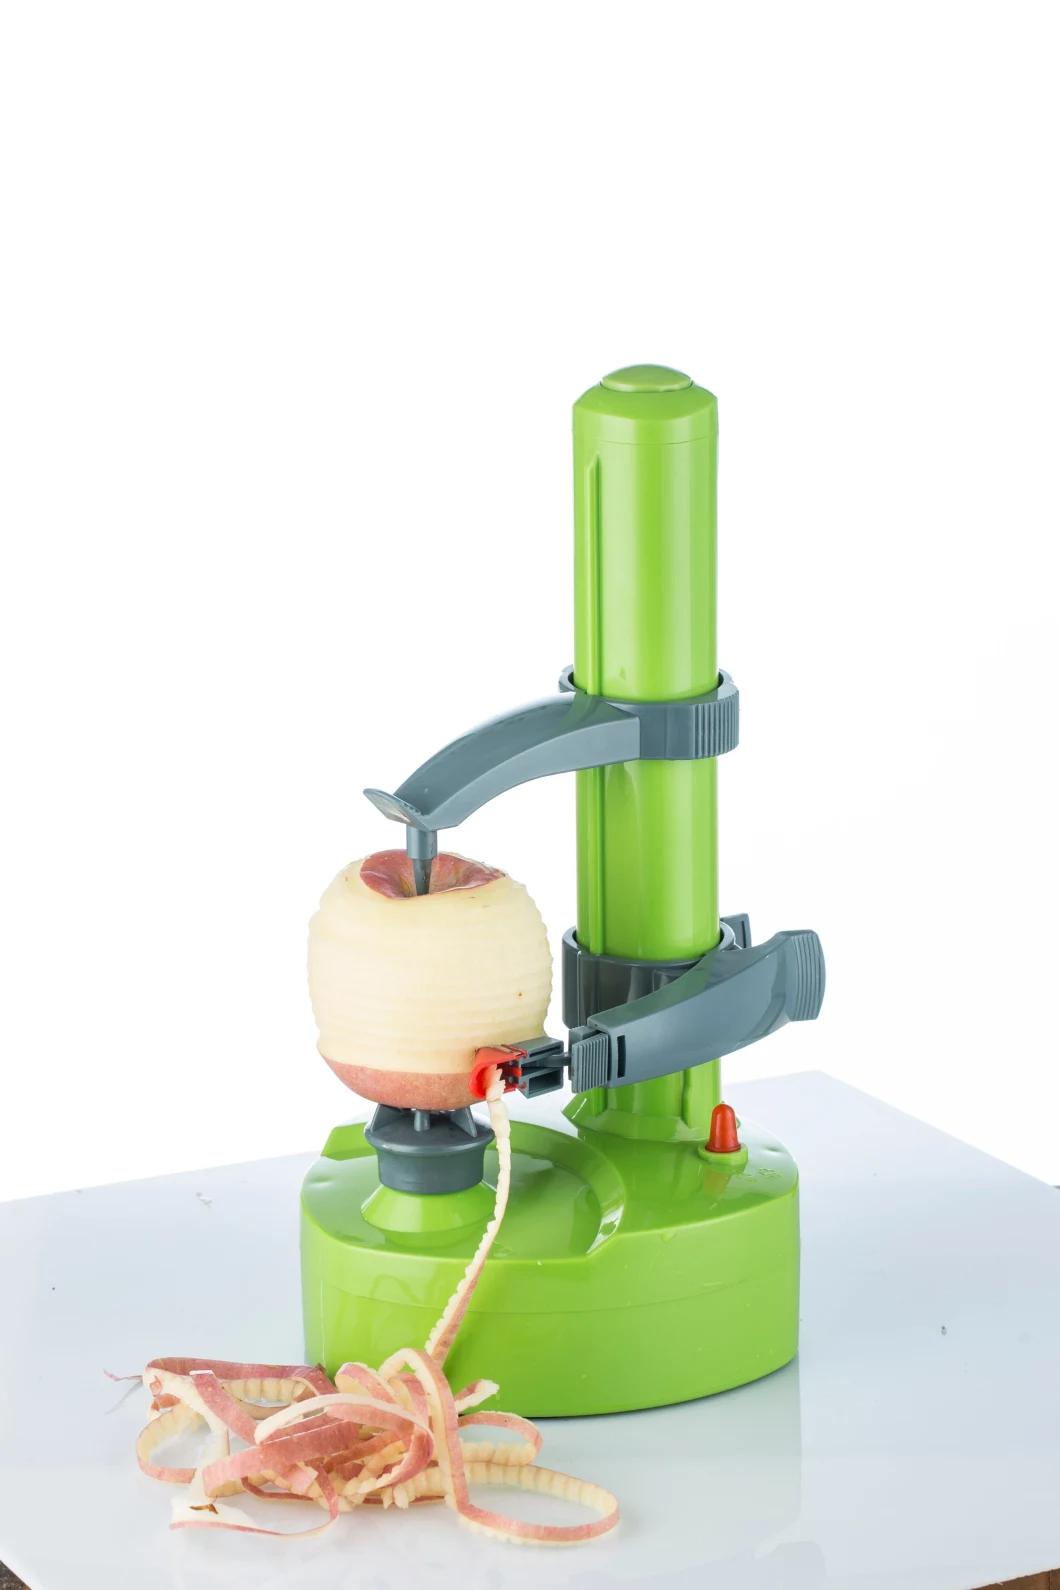 Kitchen Use Whole Sale Automatic Electric Fruit Potato Peeler Peeling Machine